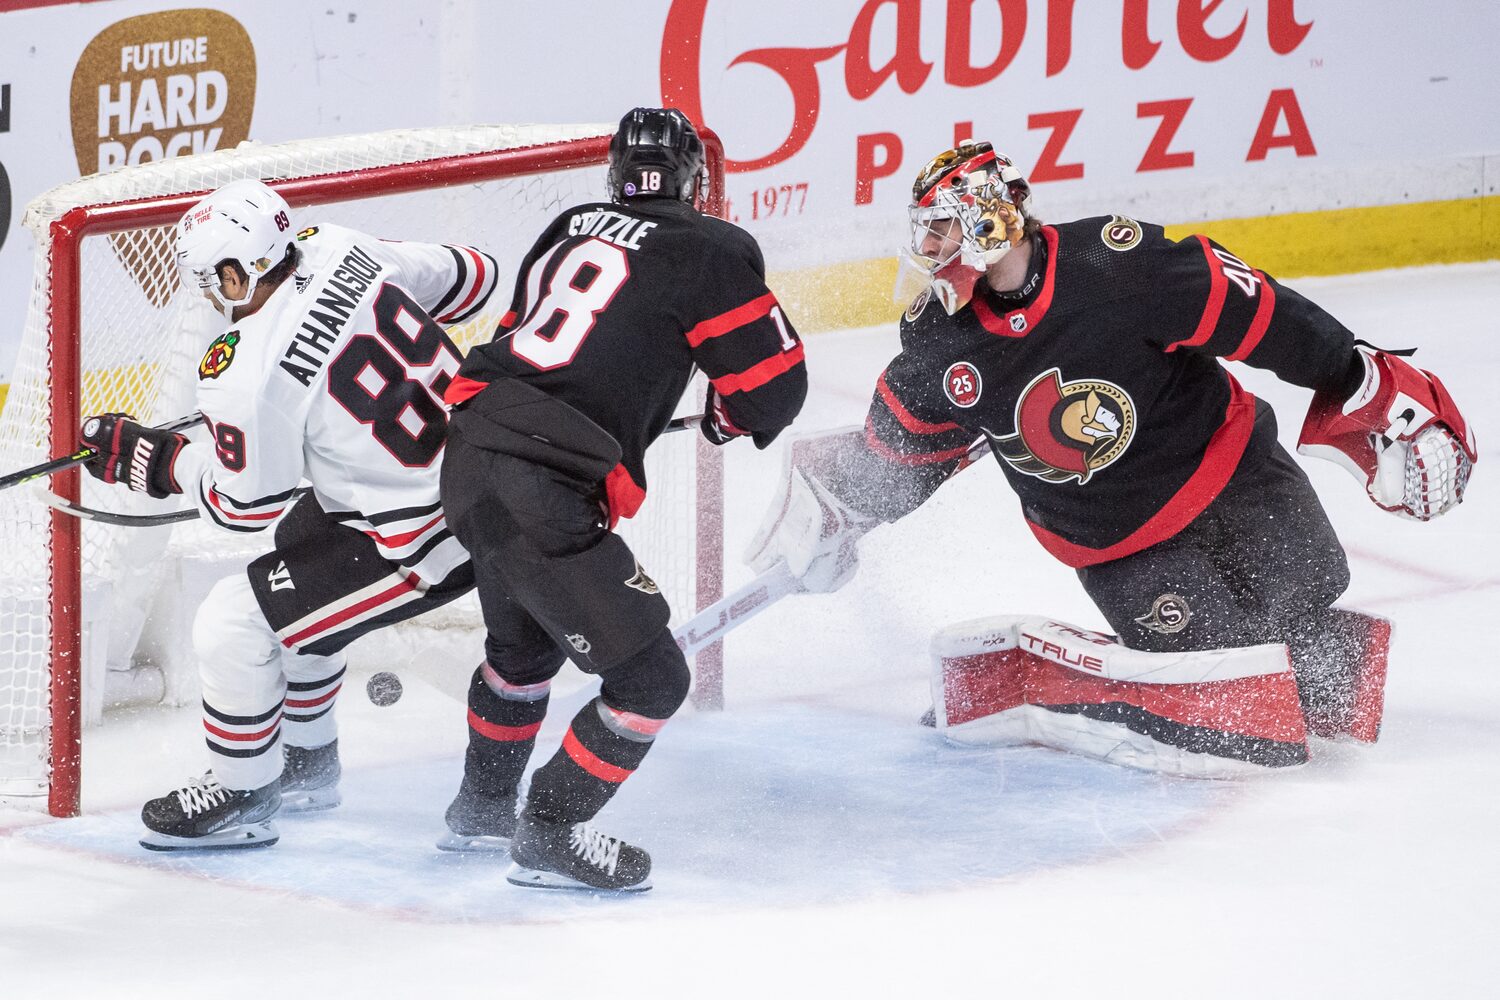 Athanasiou, Kane lead Blackhawks to 4-3 overtime win over Senators